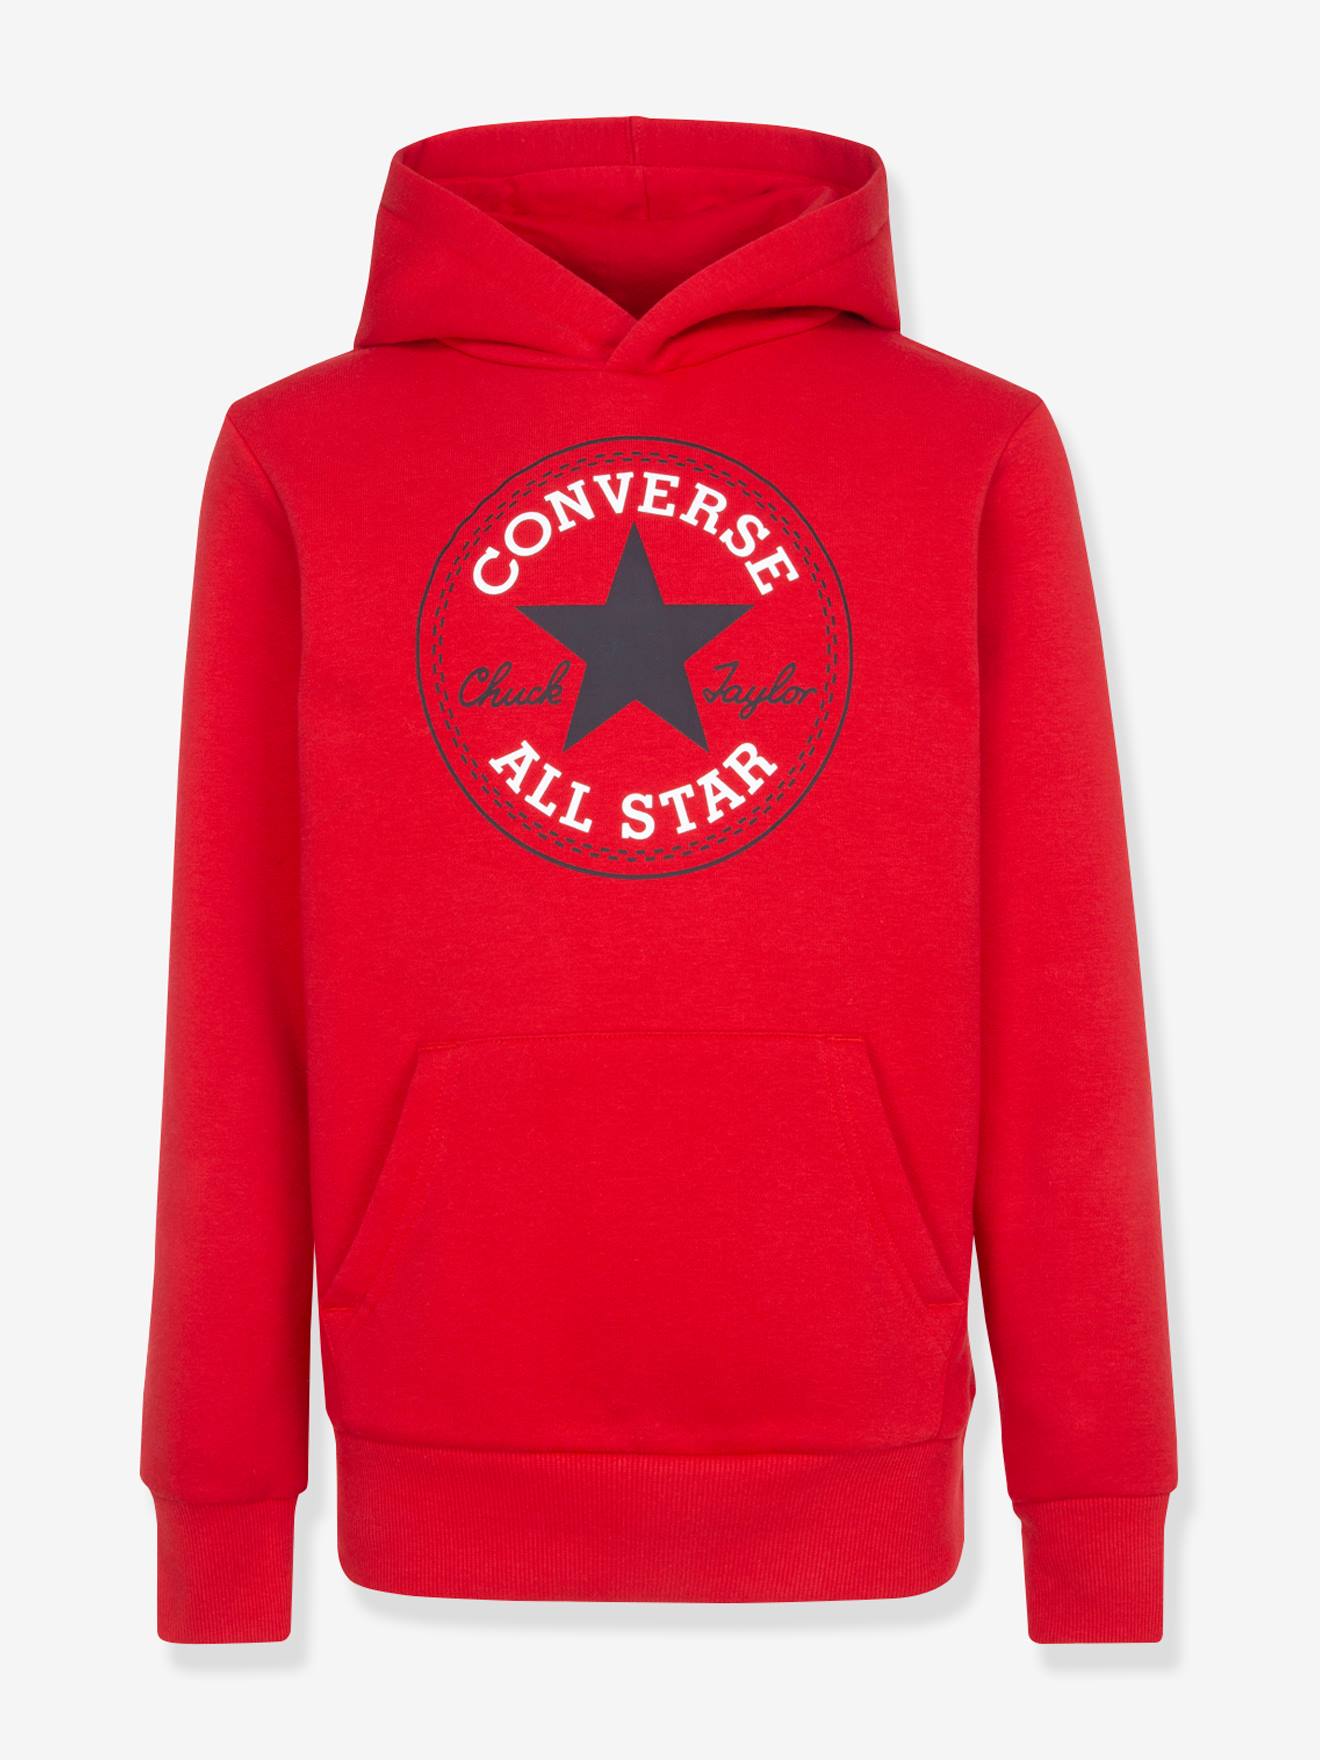 CONVERSE Sweatshirt - red, Boys